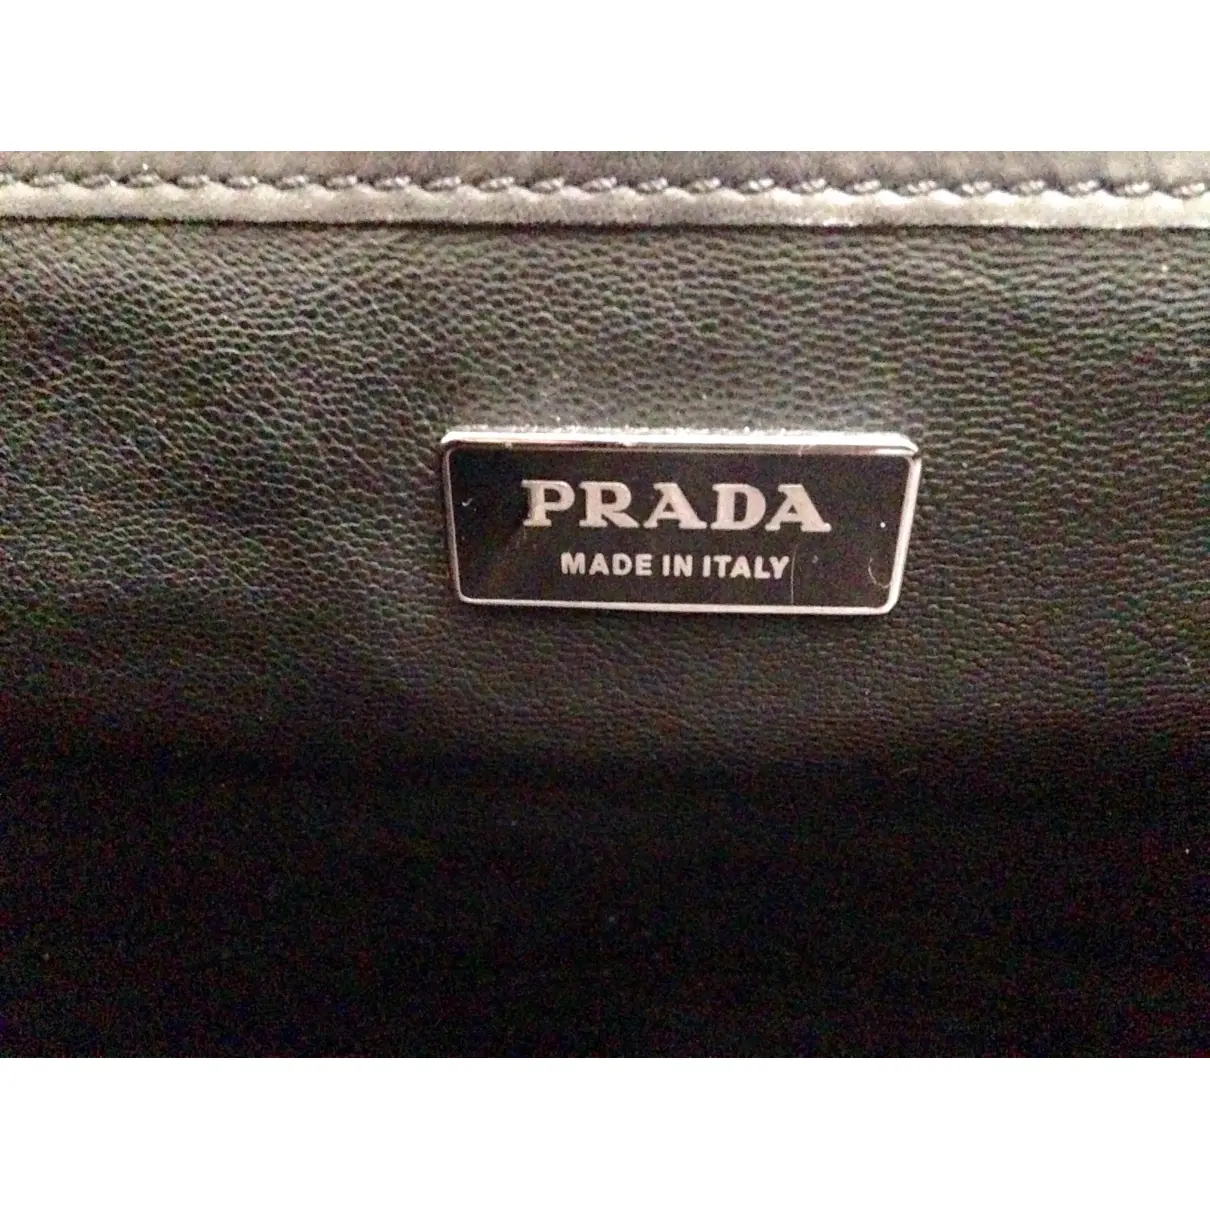 Buy Prada Crocodile satchel online